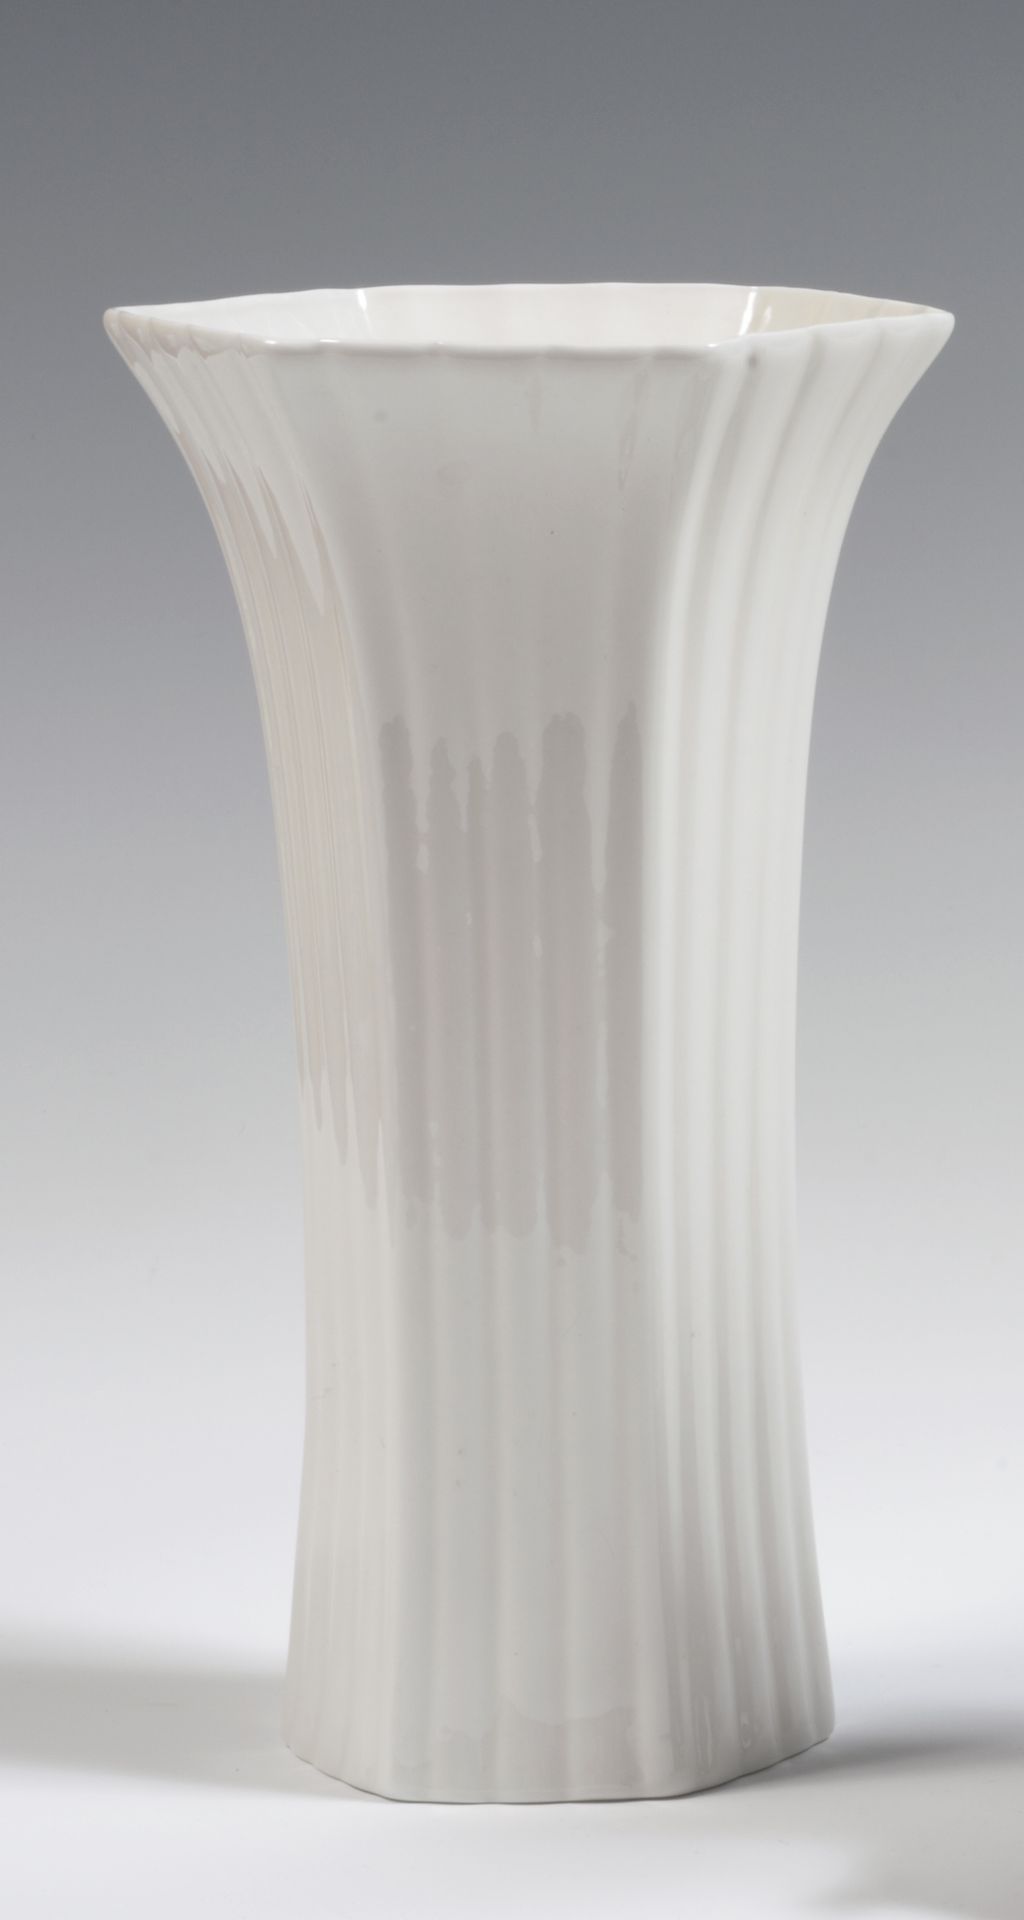 Null 
Inghilterra

Coppia di vasi esagonali in porcellana bianca con scanalature&hellip;